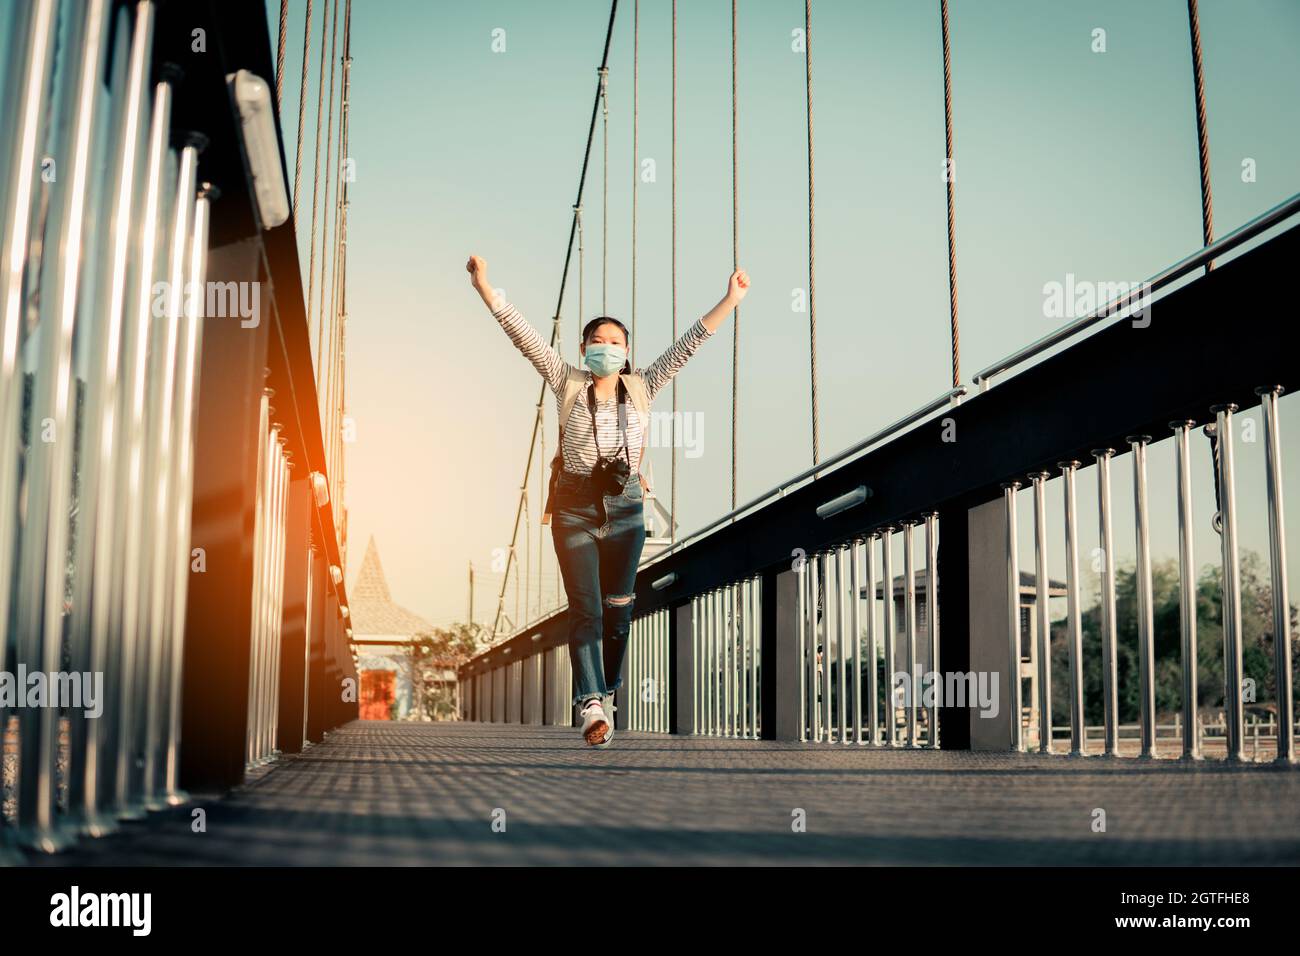 Man Standing On Bridge Against Sky During Sunset Stock Photo